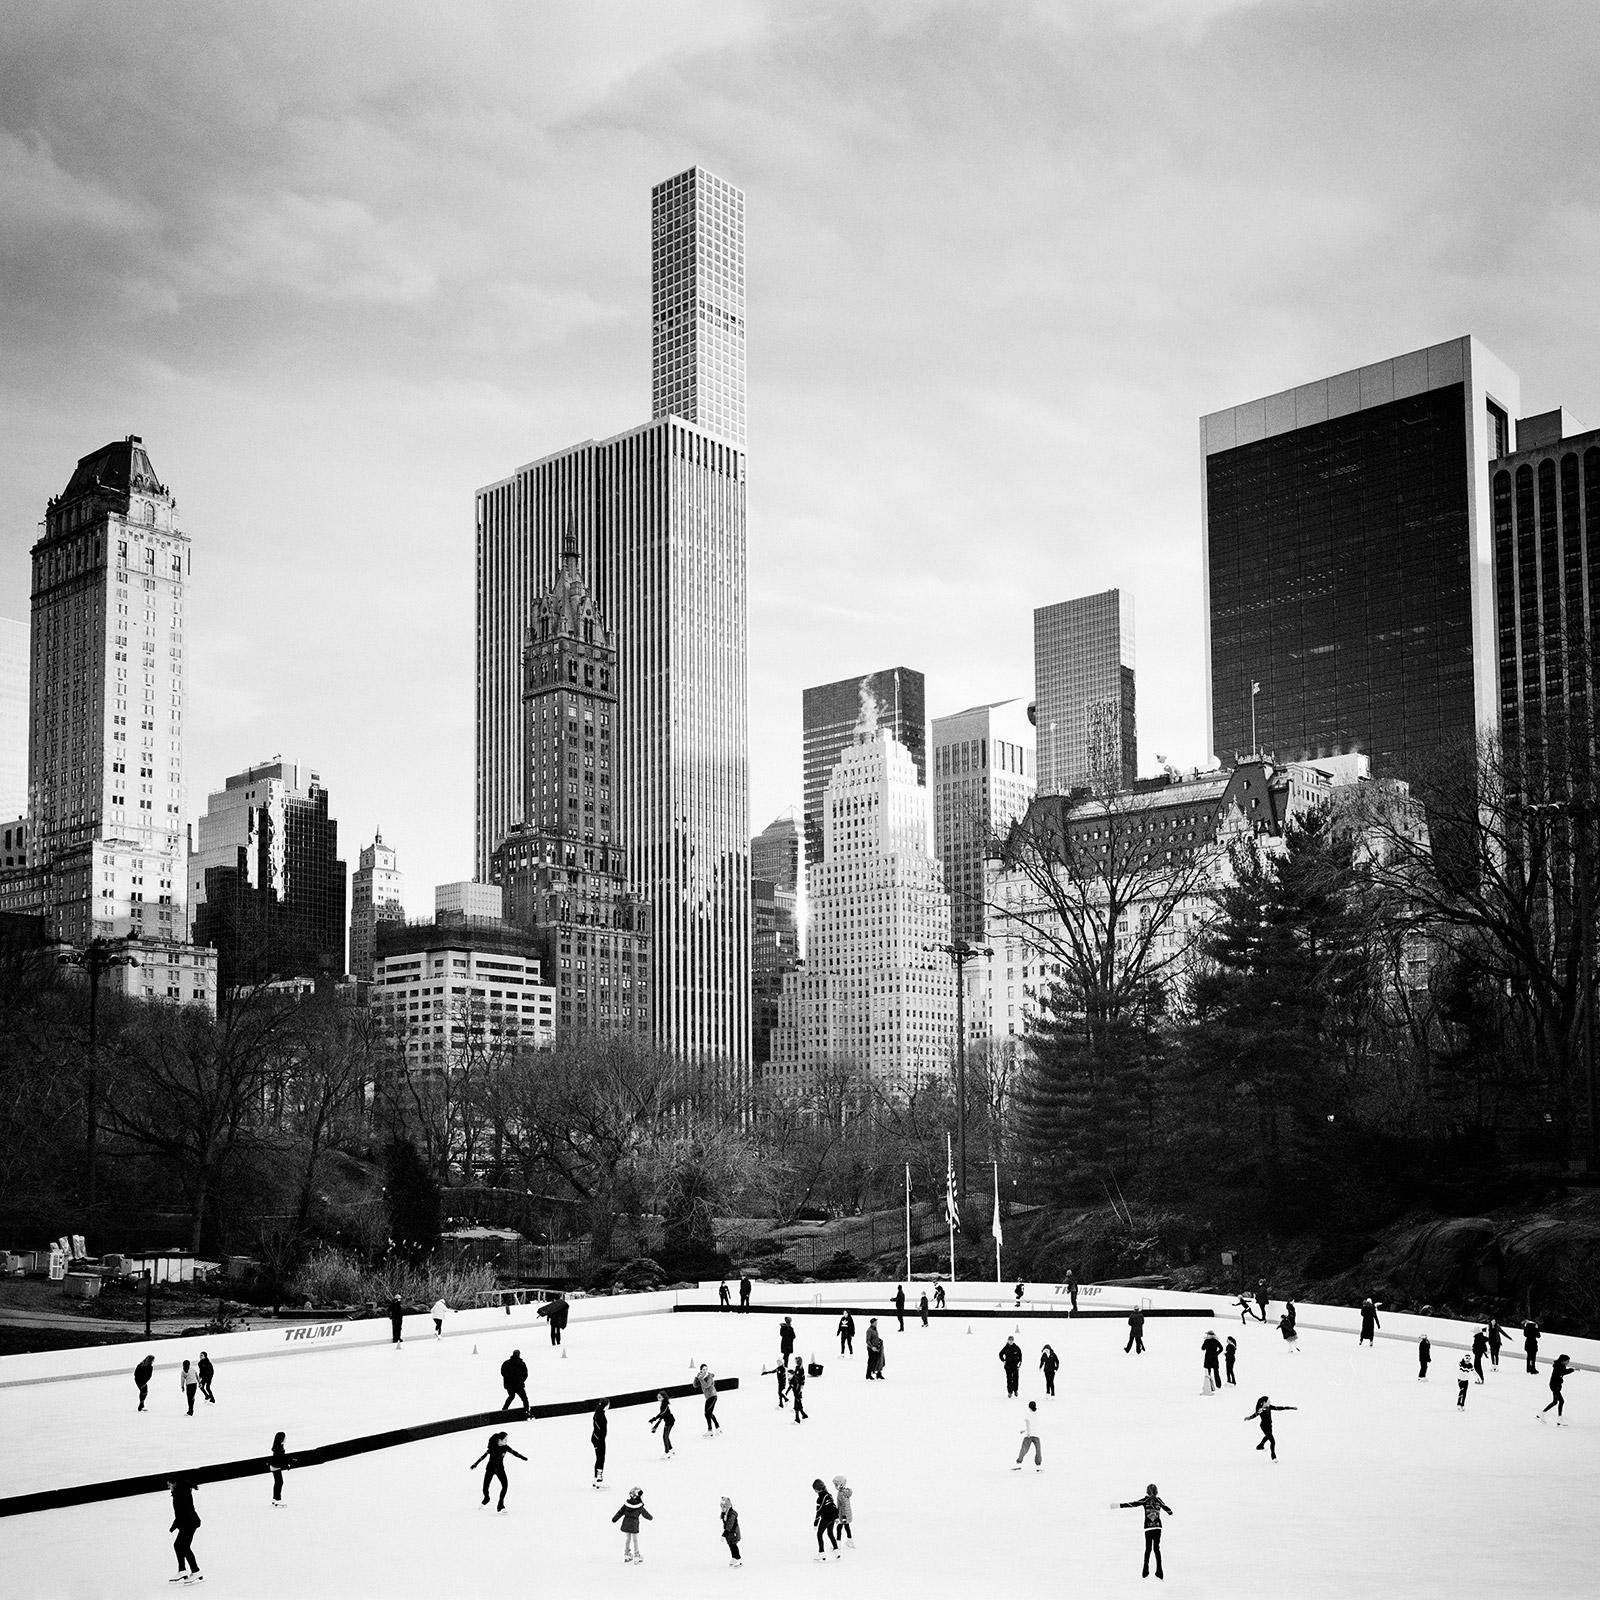 Whiting on Ice, gratte-ciel, New York, USA, photographie noir et blanc paysage urbain